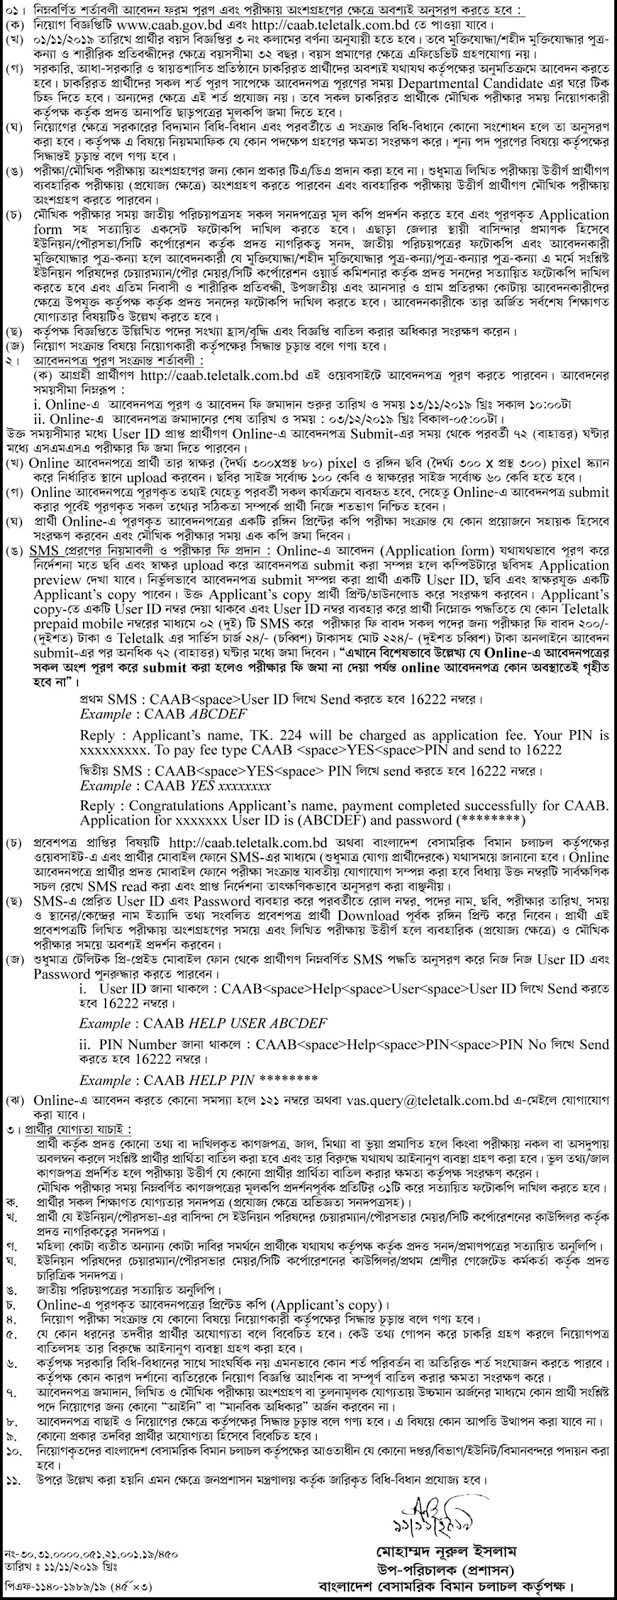 Civil Aviation Authority, Bangladesh (CAAB) Job Circular 2019